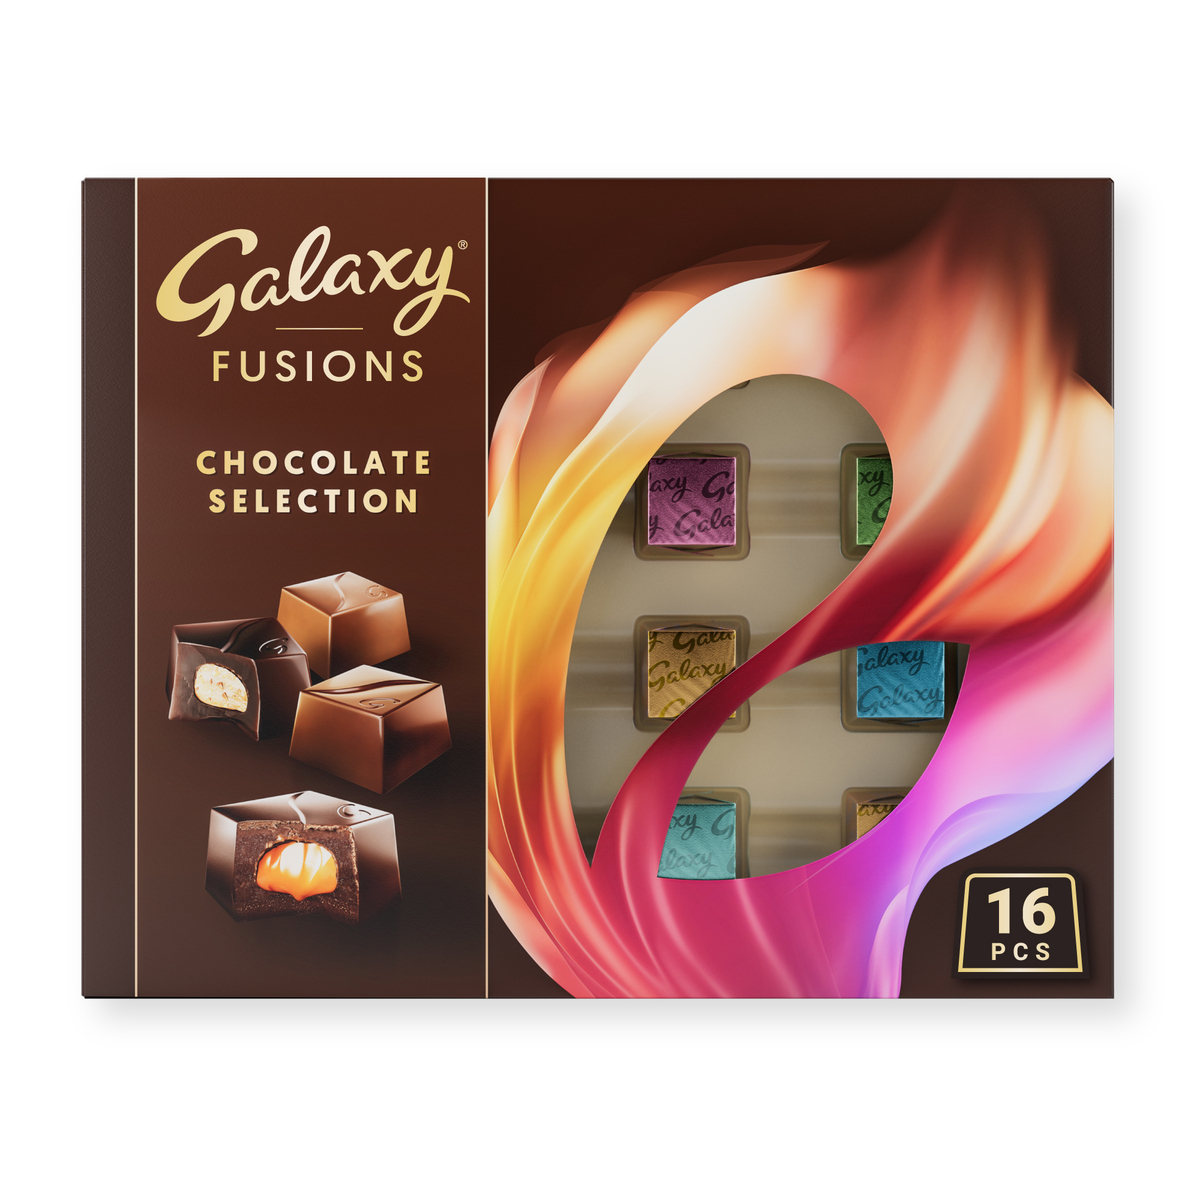 Galaxy Fusions Chocolate Selection 16 pcs 180.8 g